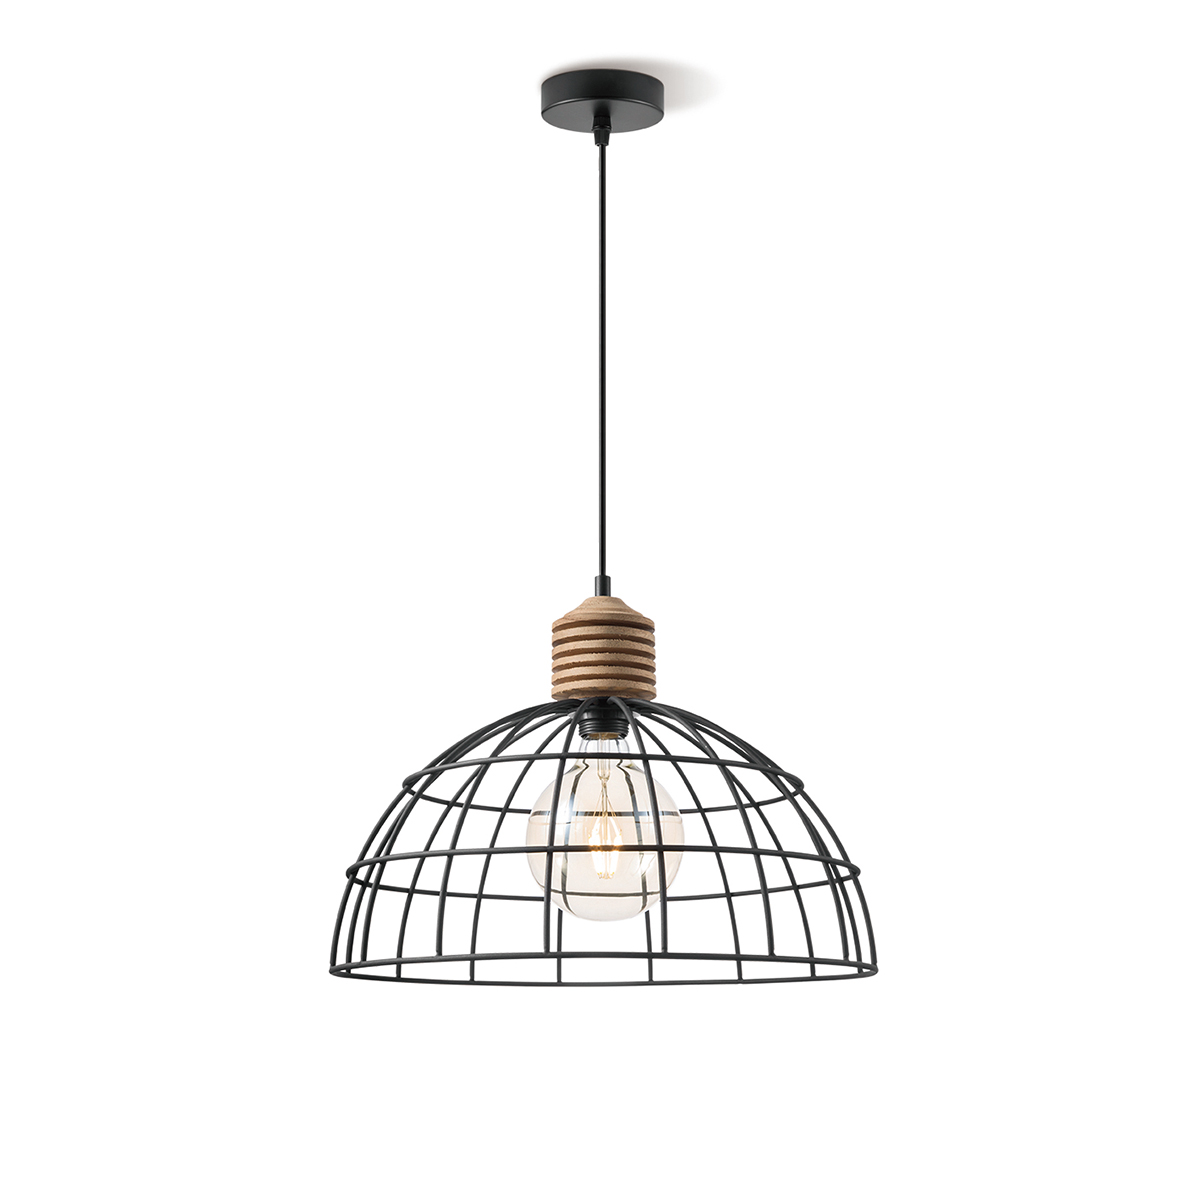 Tangla lighting - TLP4026-01SB - LED pendant lamp 1 Light - metal and wood in sand black - frame - large - E27